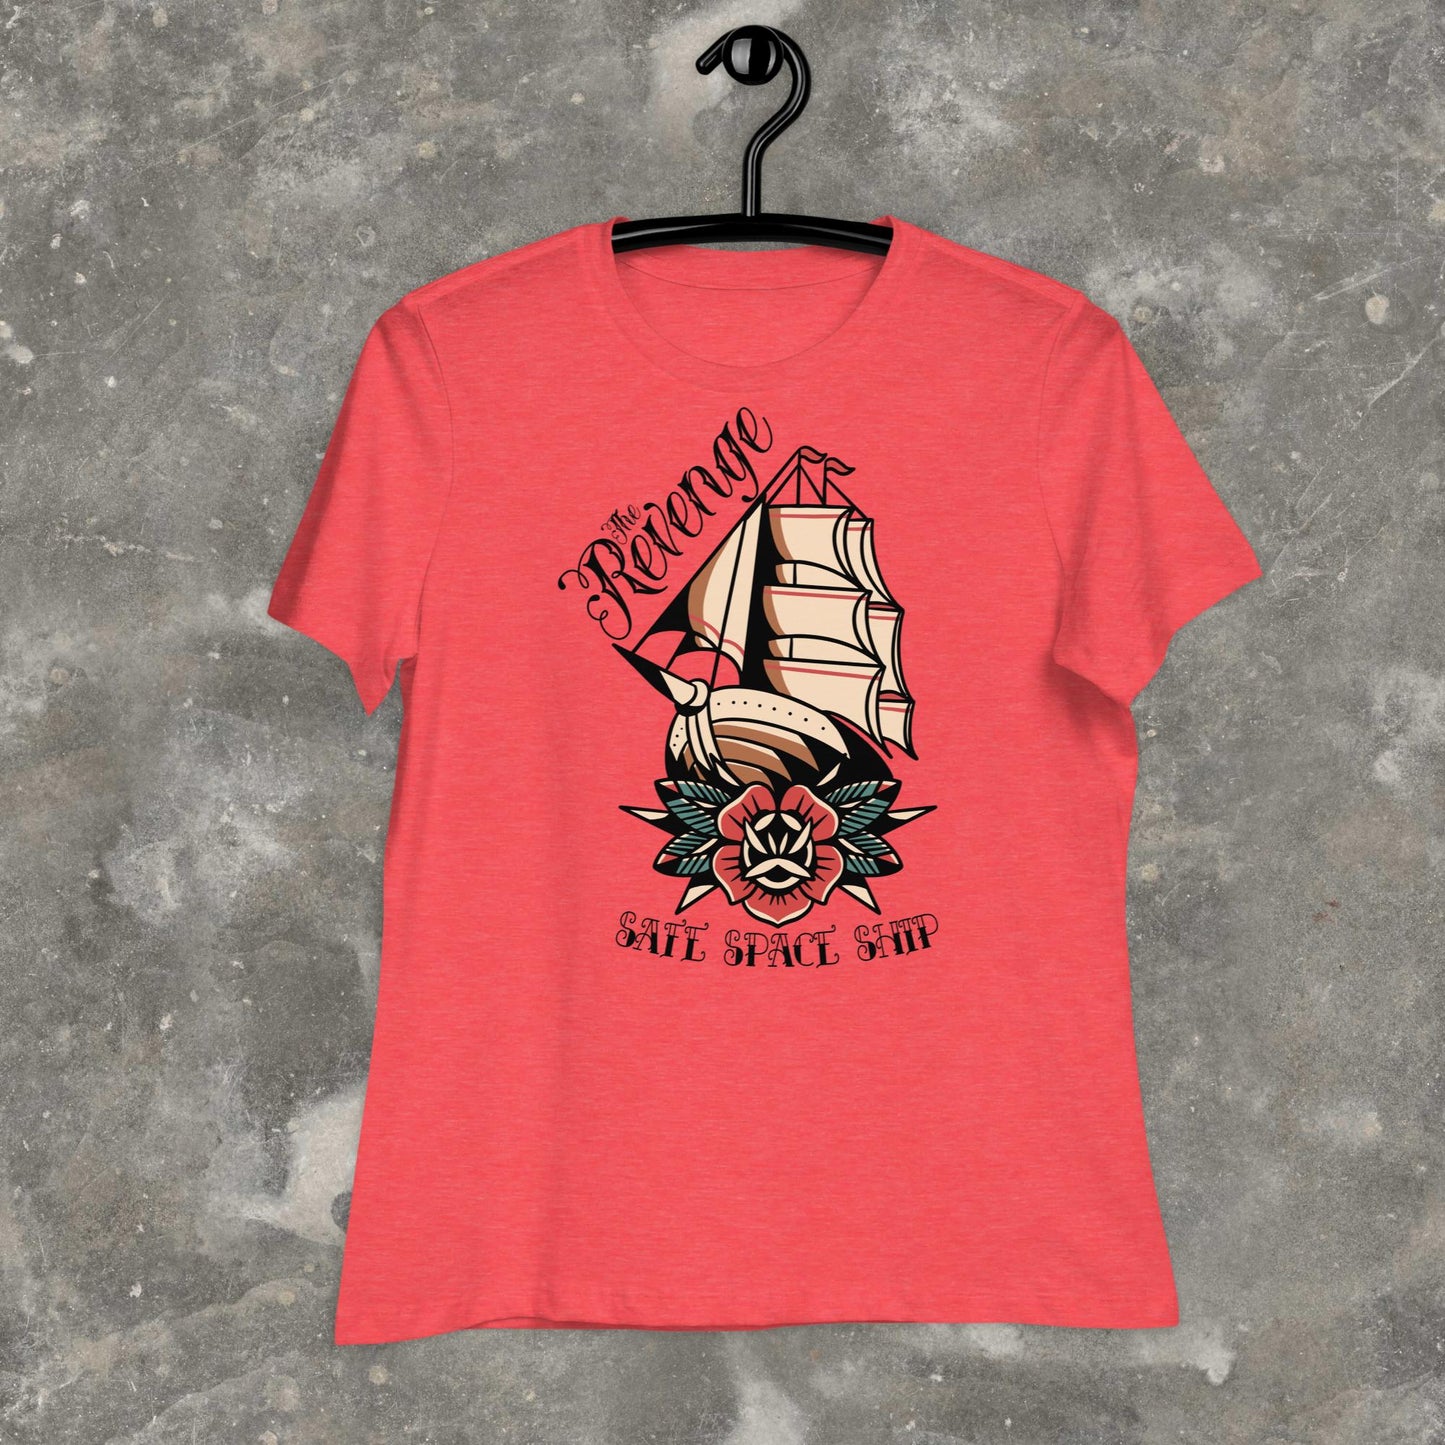 OFMD Our Flag Means Death Blackbonnet Safe Space Ship Revenge Tattoo Femme Fit Relaxed T-Shirt